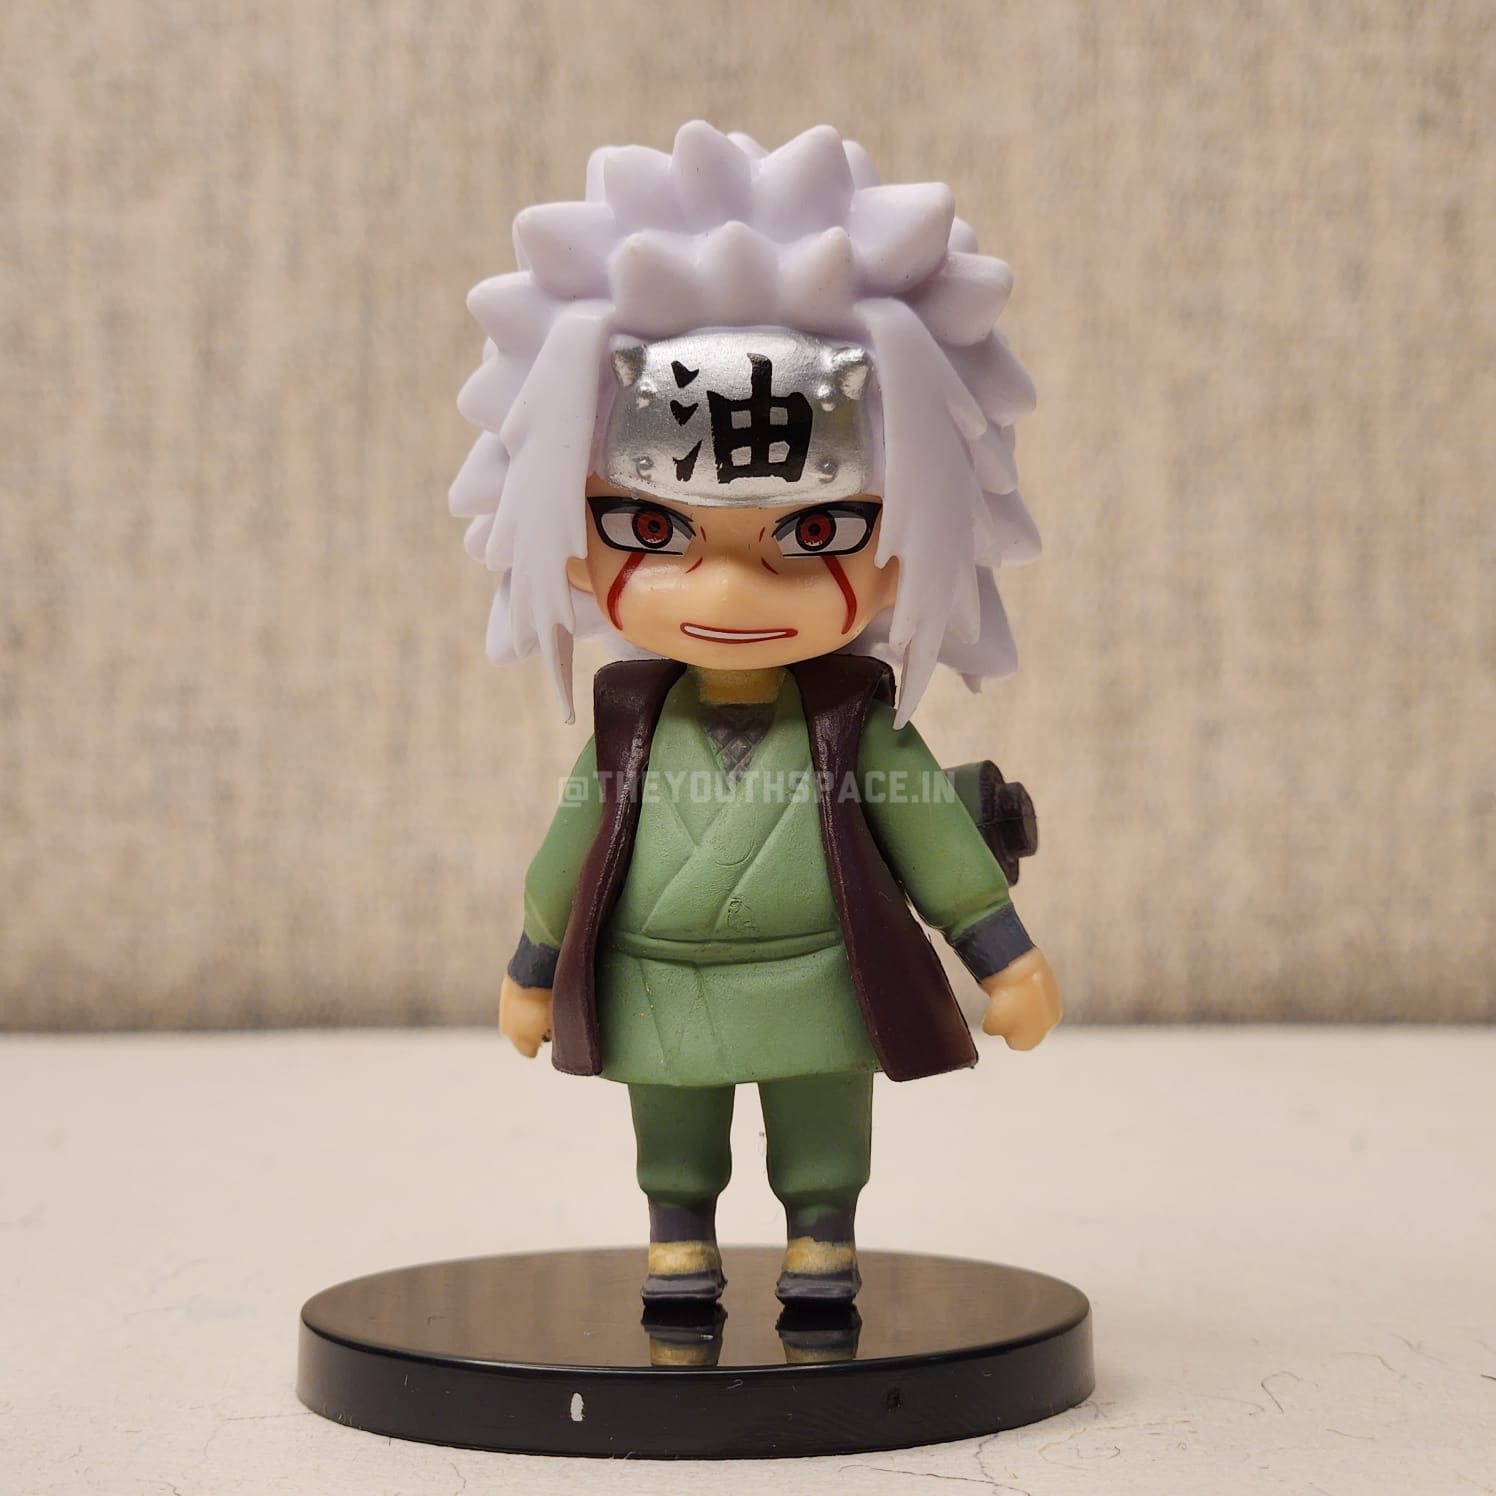 Naruto set of 6 Figurines